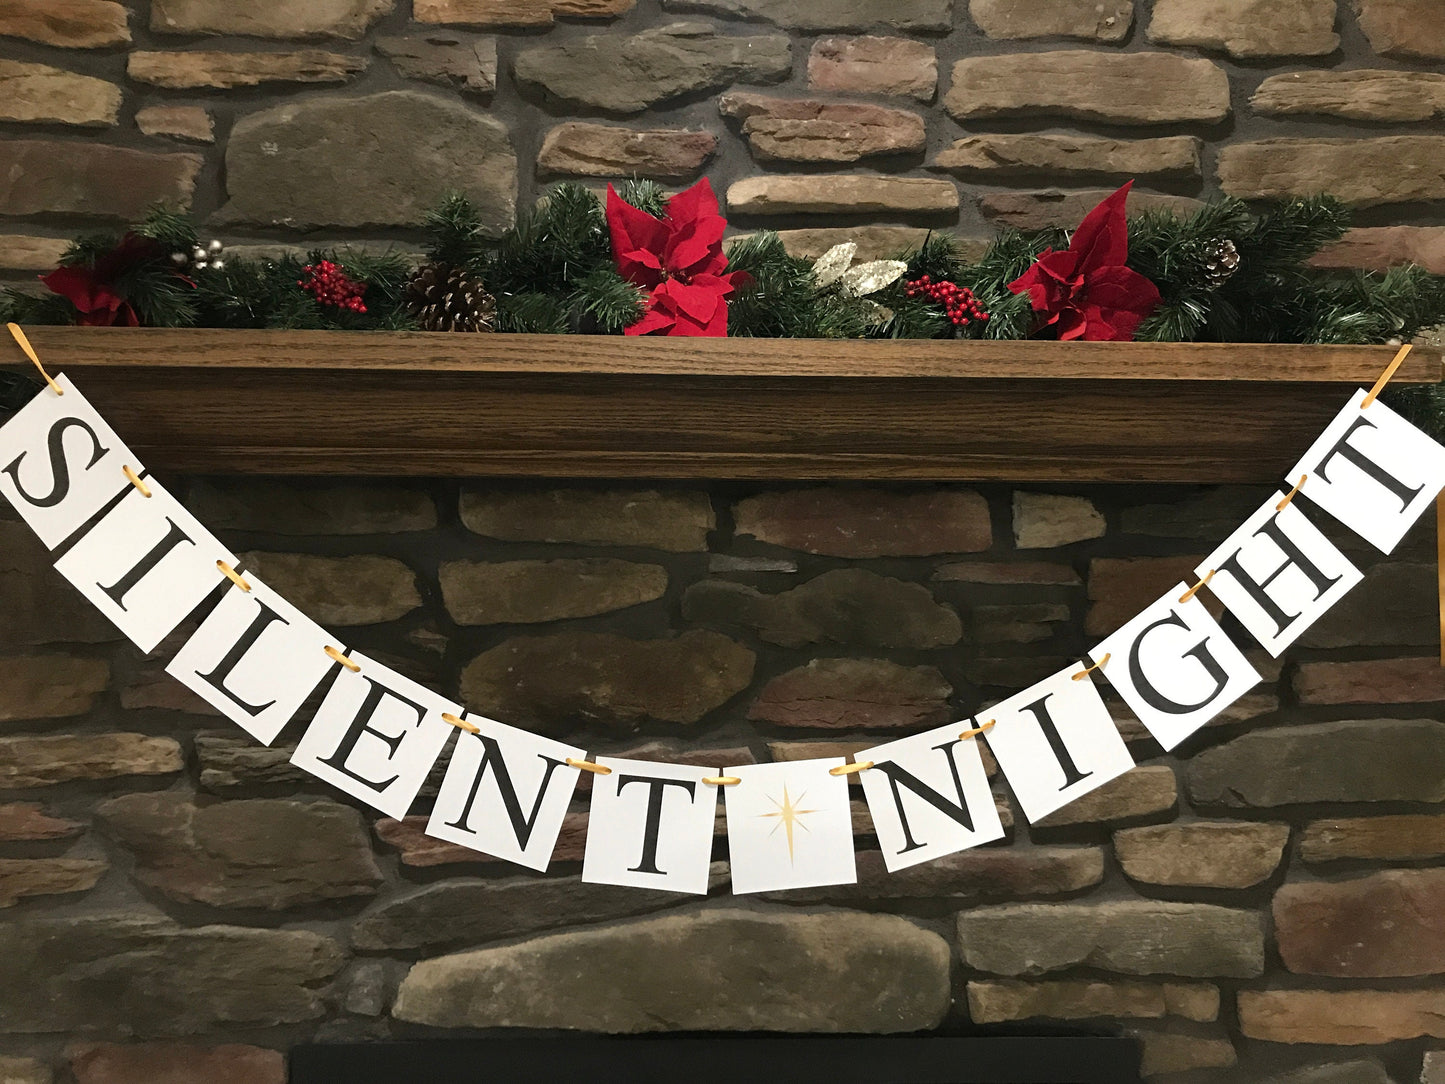 Silent night Banner, Gold North Star Christmas decorations, living room holiday decor, fireplace mantel bunting, Christmas carol garland